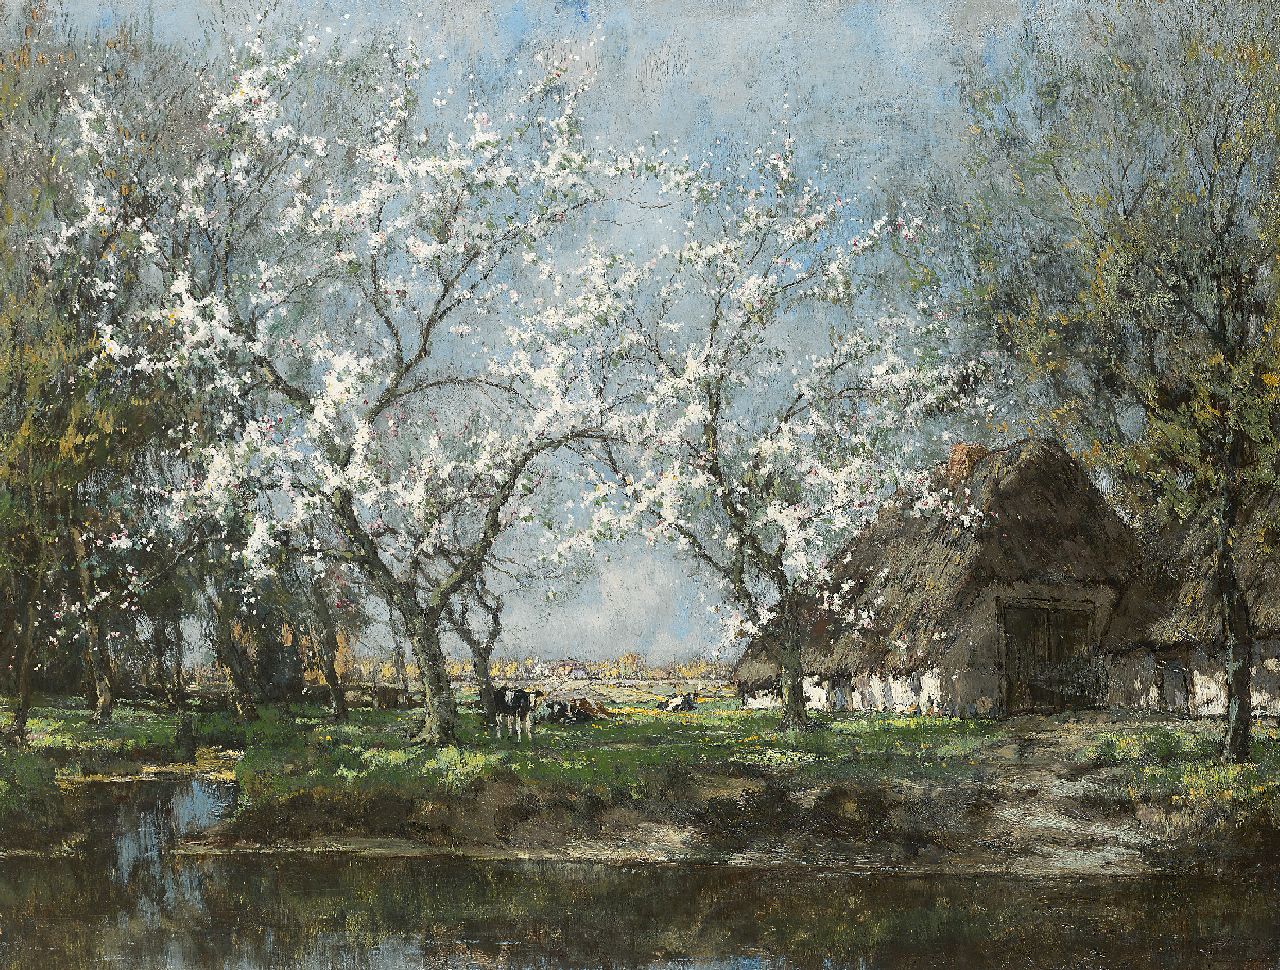 Gorter A.M.  | 'Arnold' Marc Gorter, An orchard in full bloom, Öl auf Leinwand 75,5 x 99,8 cm, signed l.r.